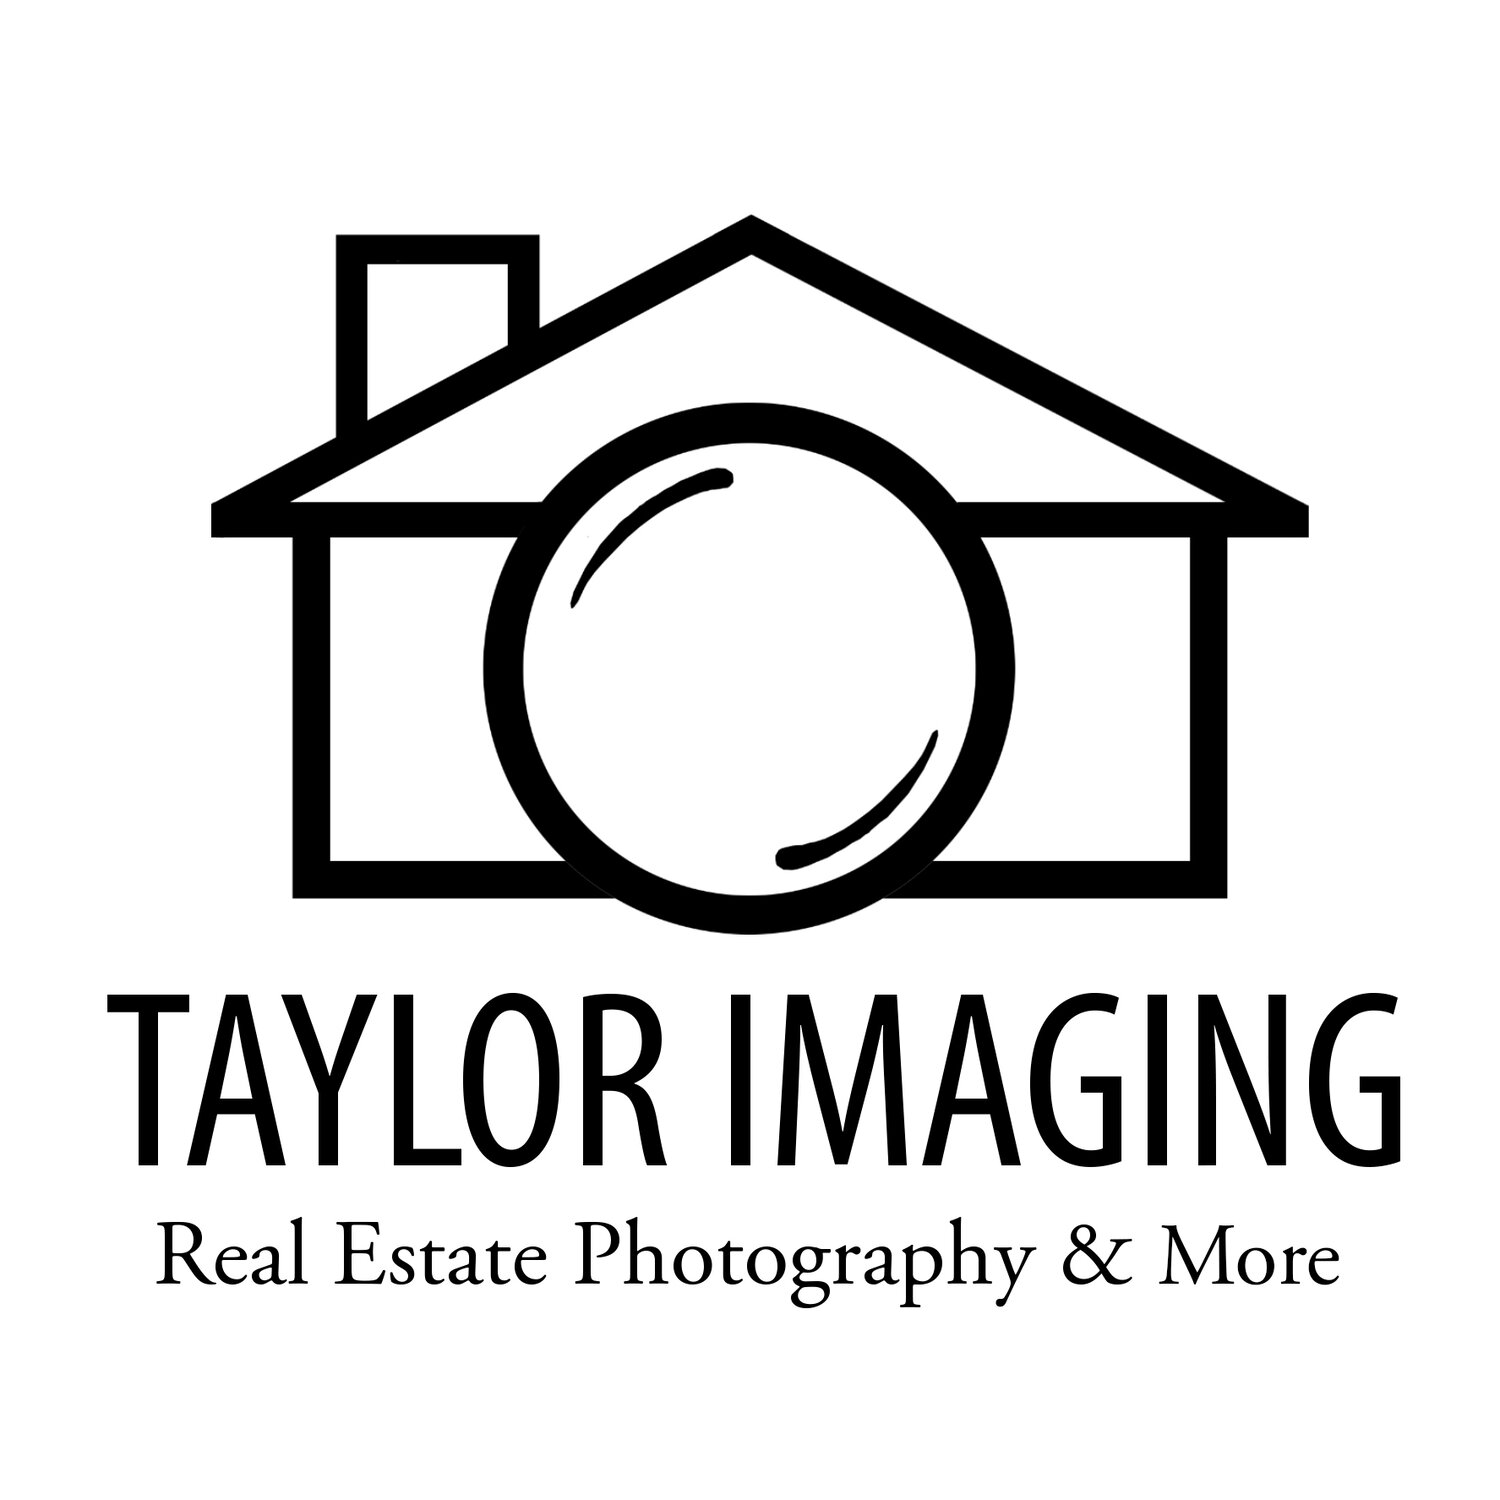 Taylor Imaging